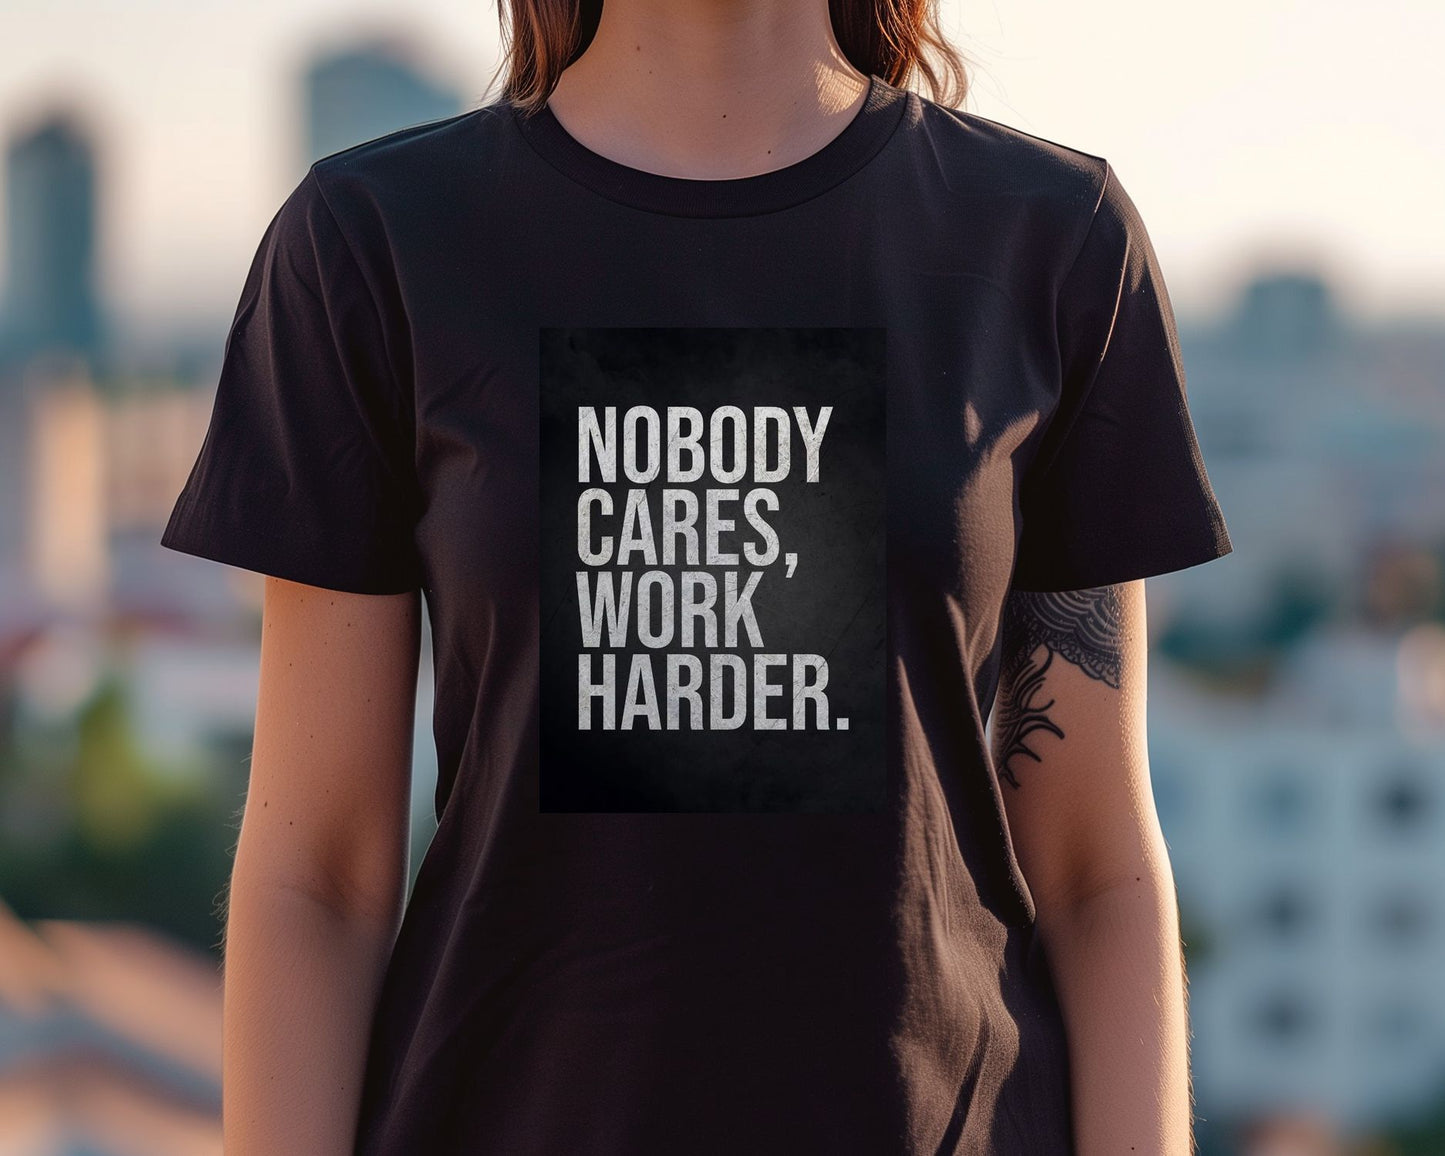 Nobody Cares Work Harder - @MKSTUDIO